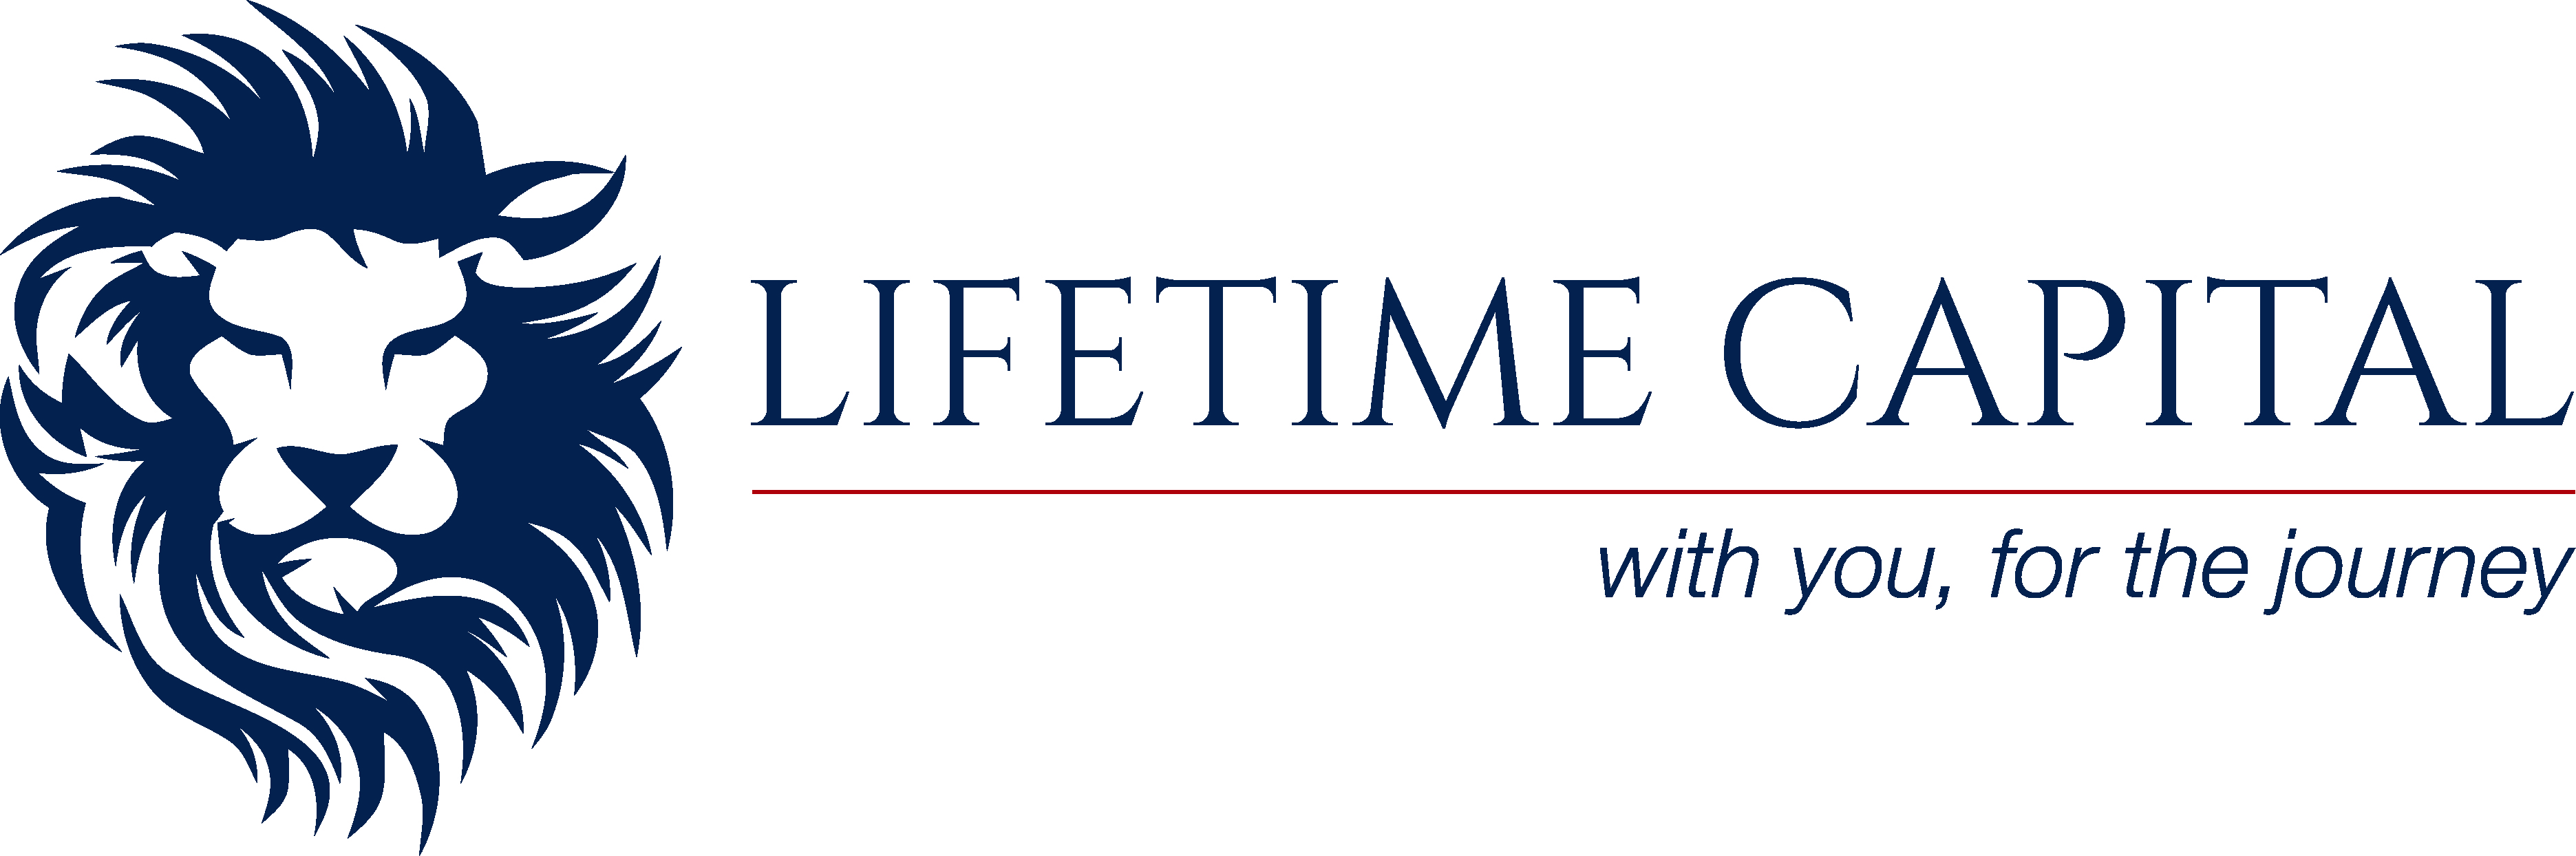 lifetime-capital-logo